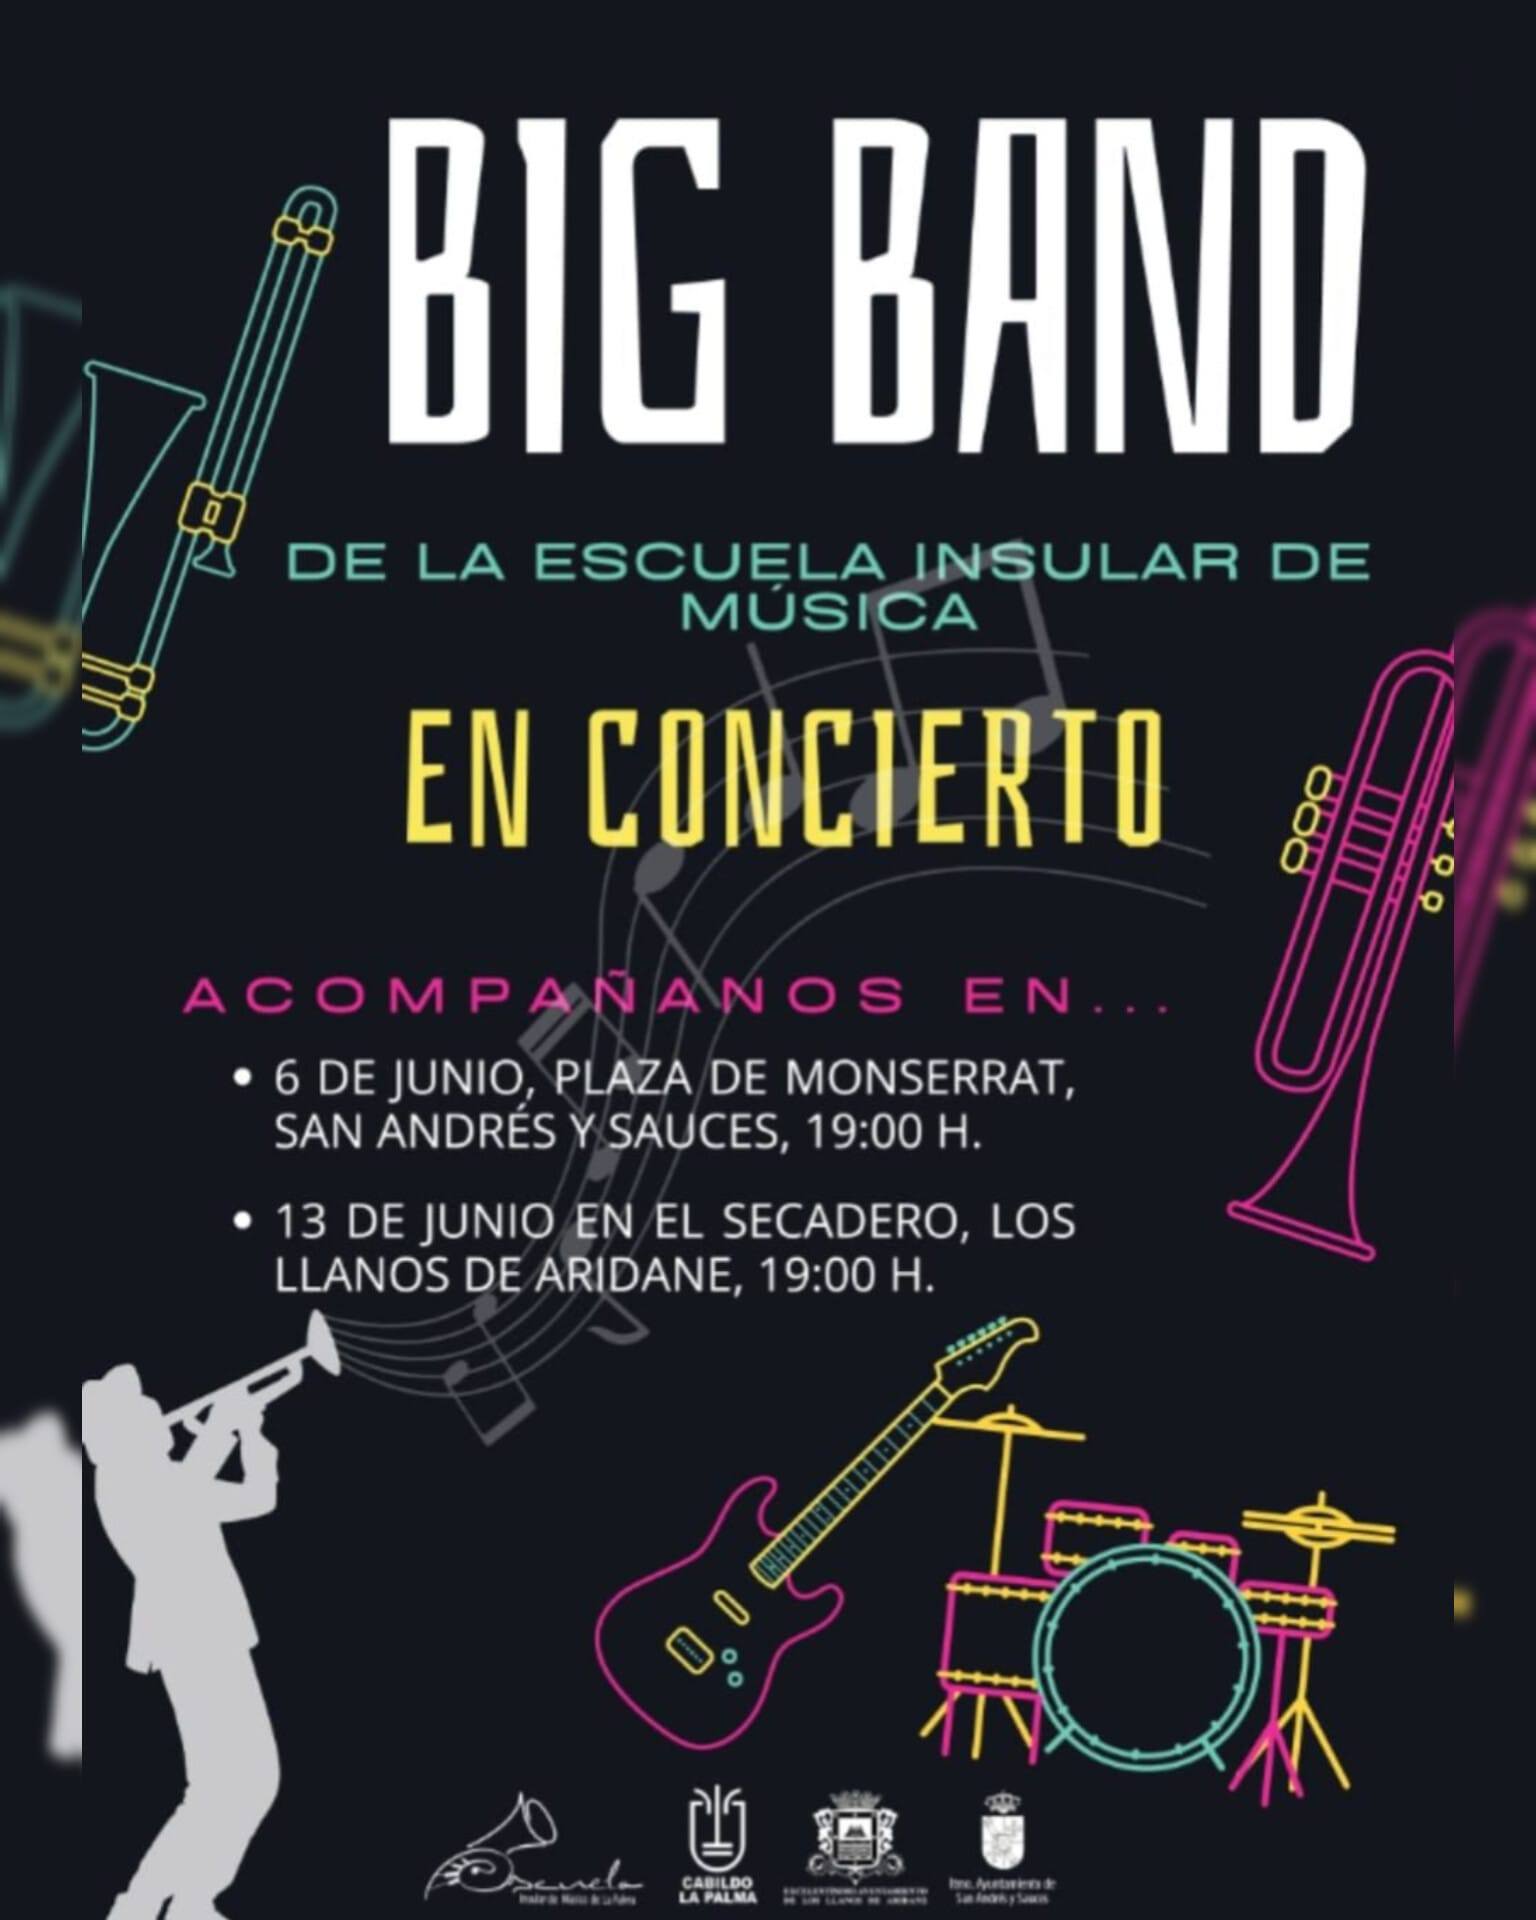 Big Band de la Escuela Insular de Música de La Palma en El Secadero